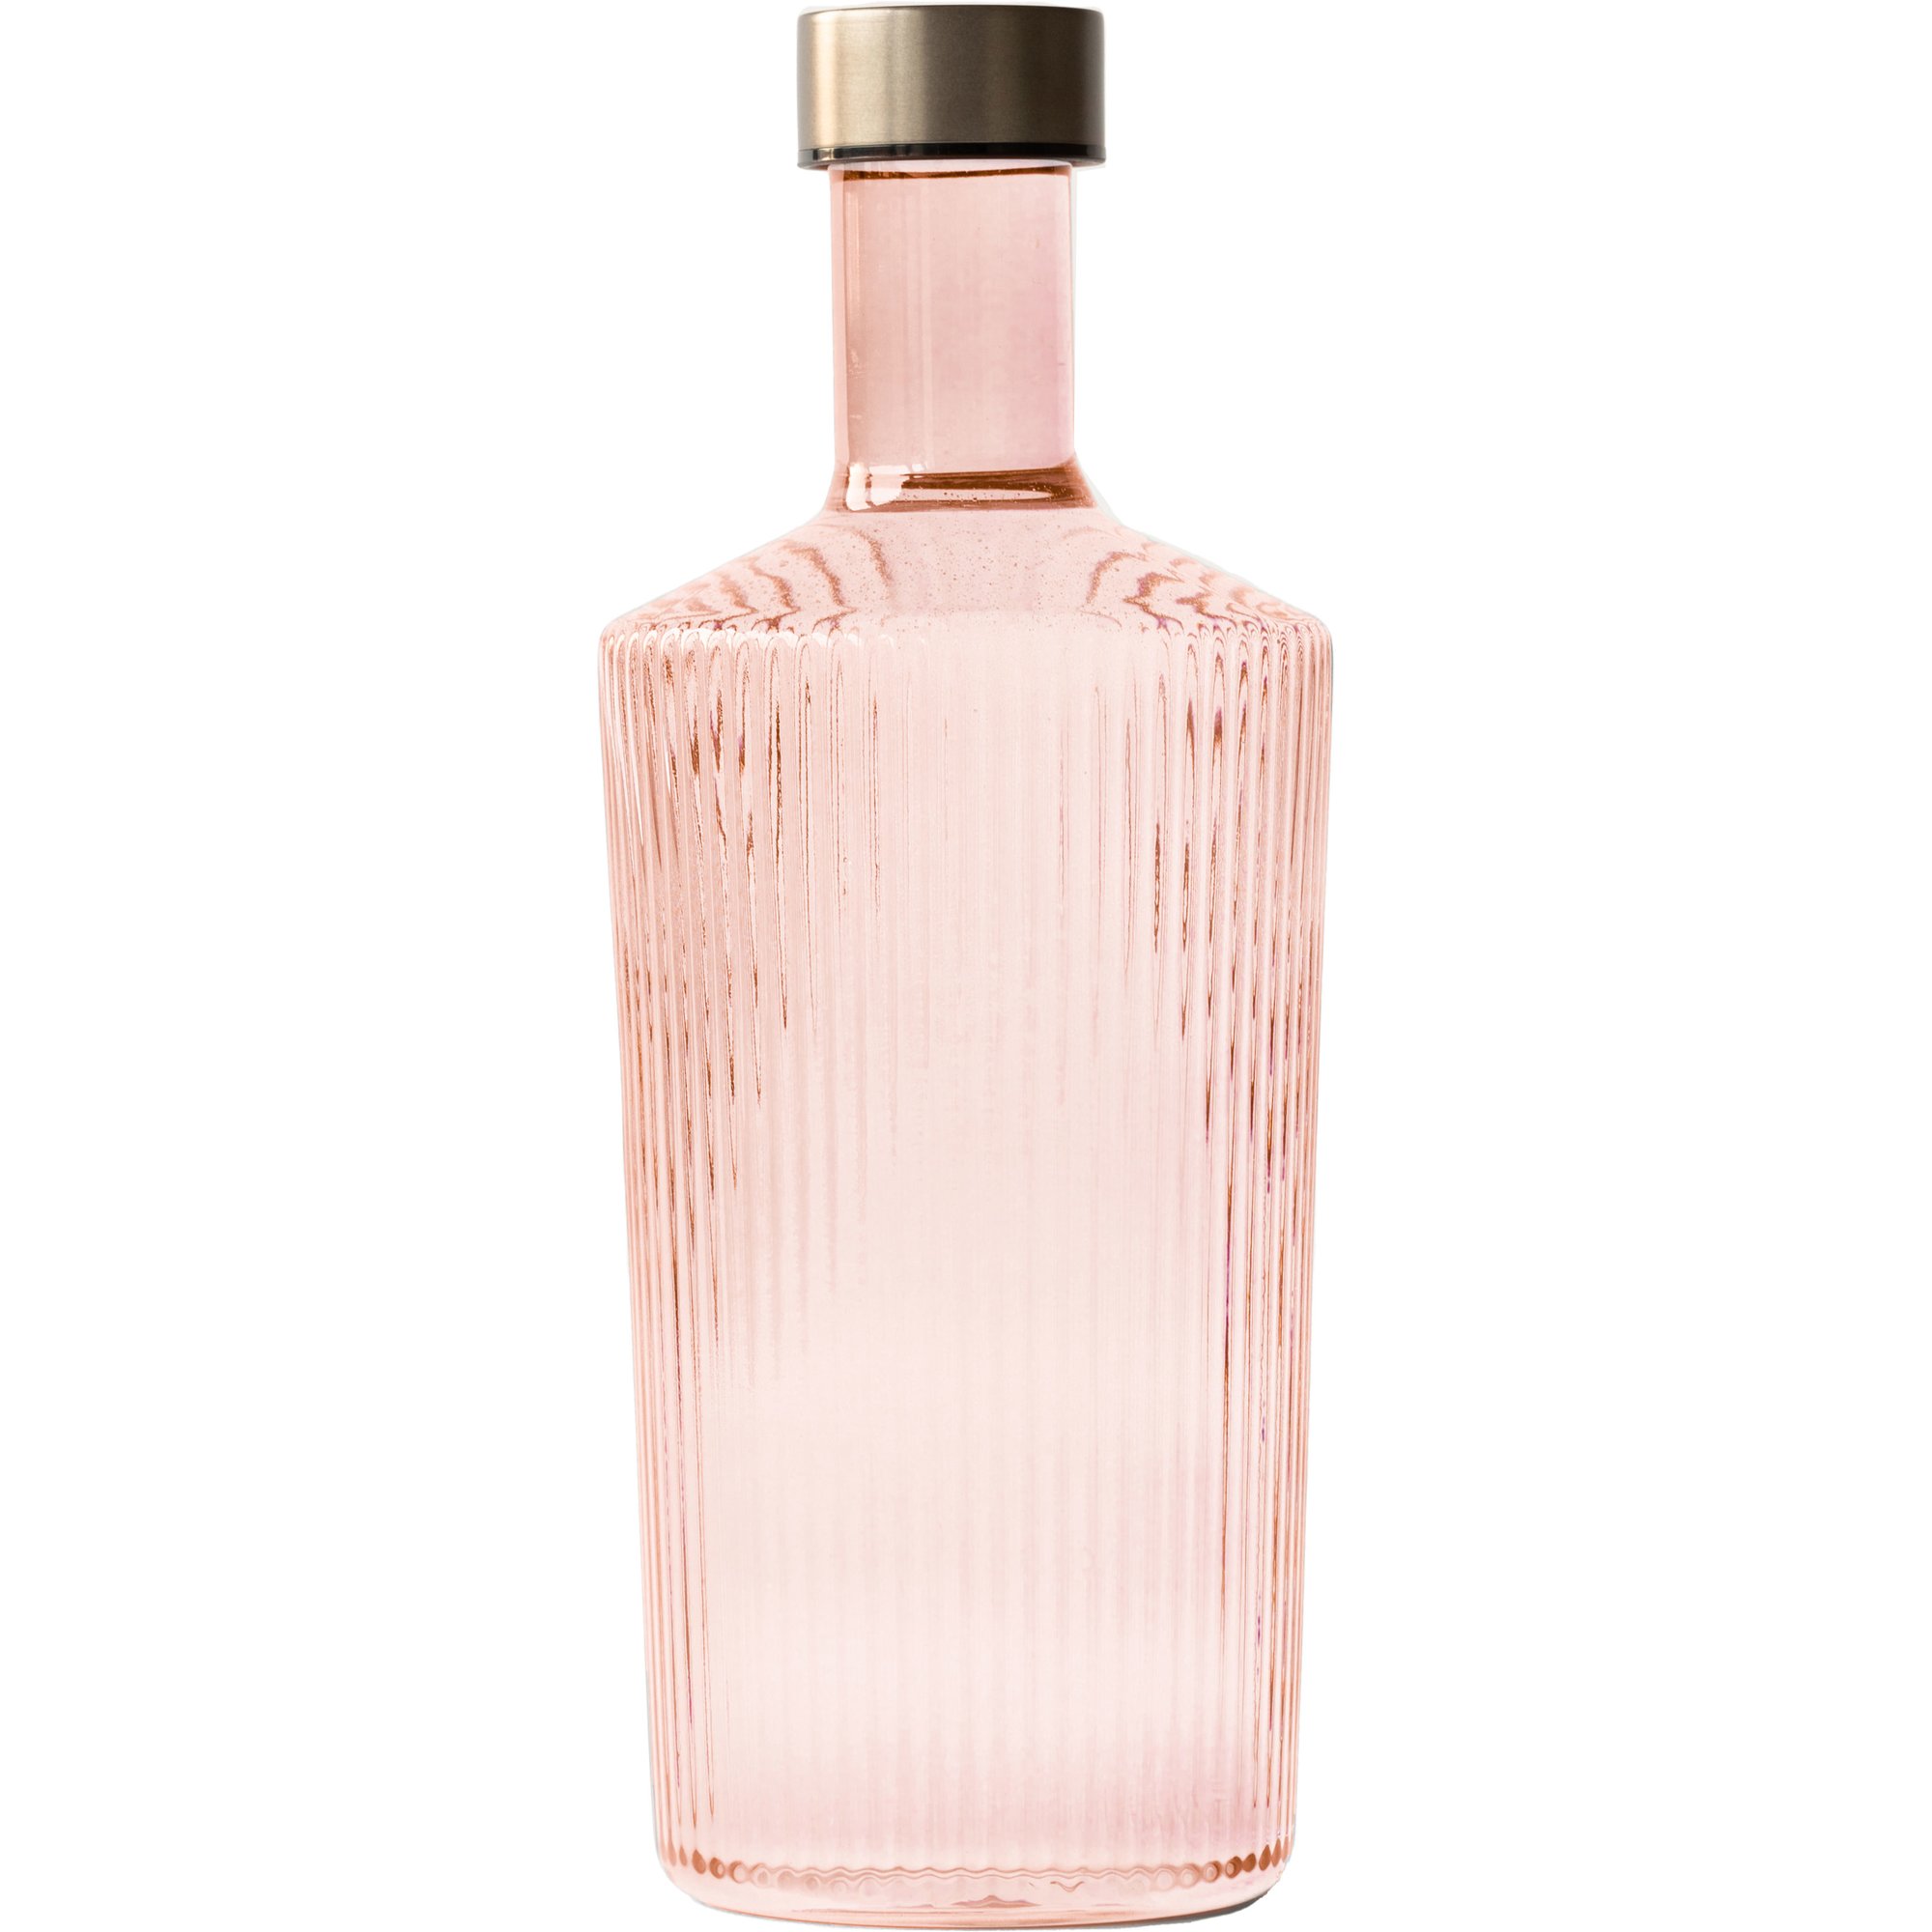 Paveau Vandflaske, 1,25 liter, pink